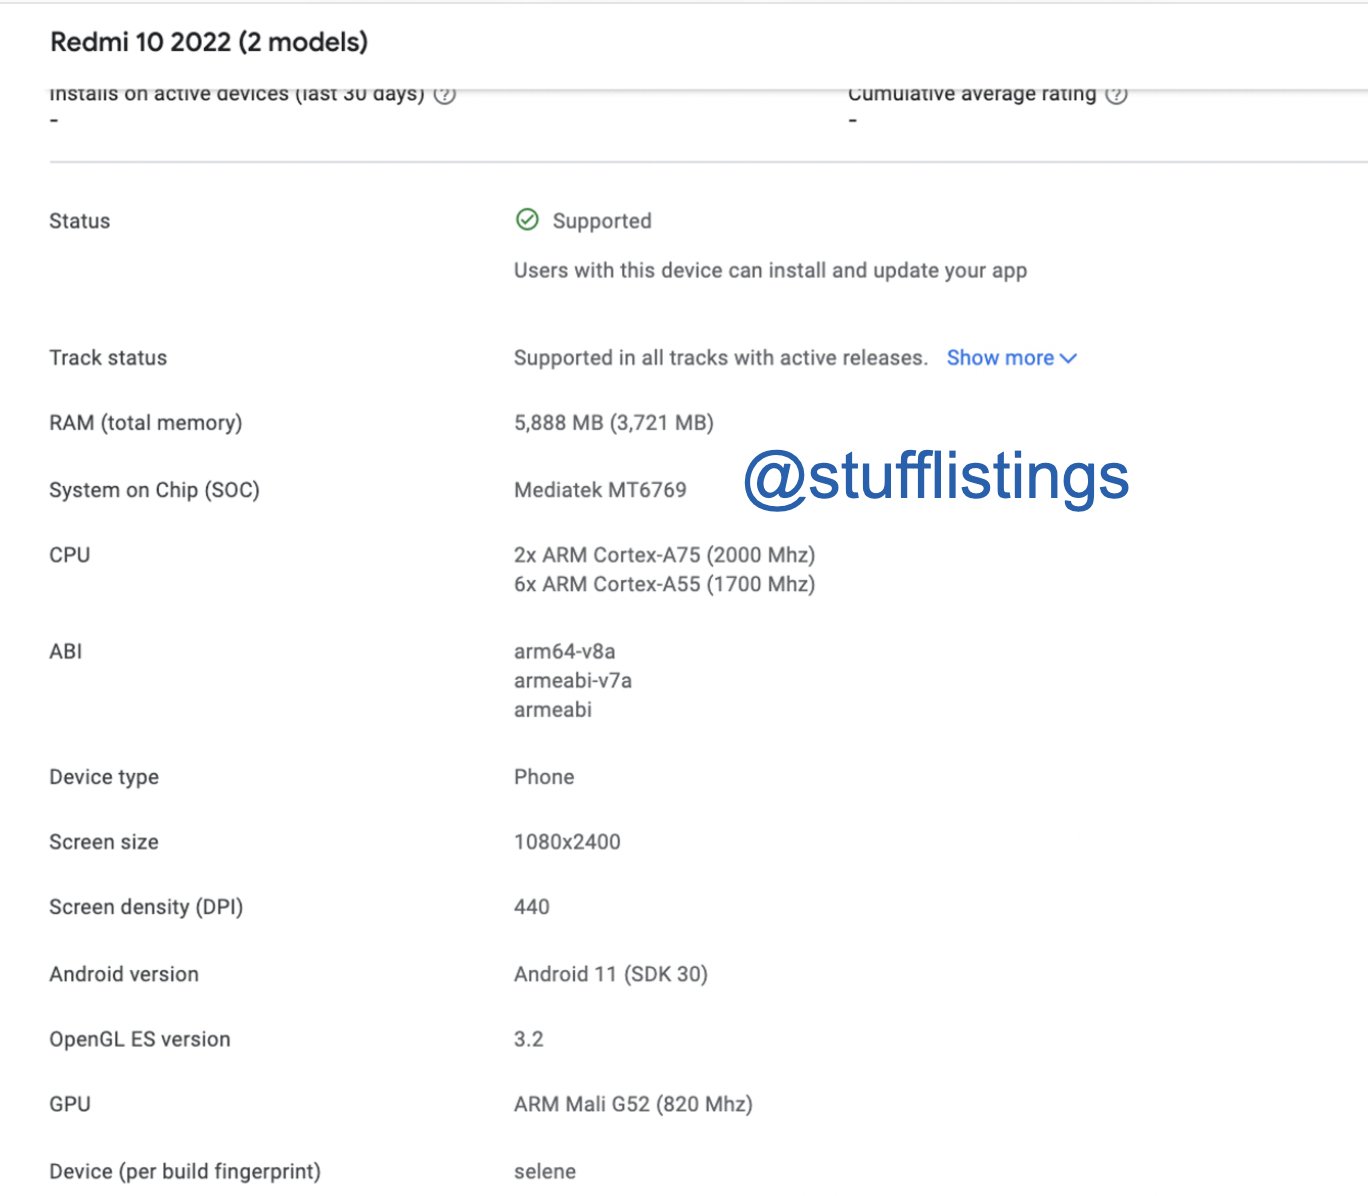 Redmi 10 2022 Google Play Console list